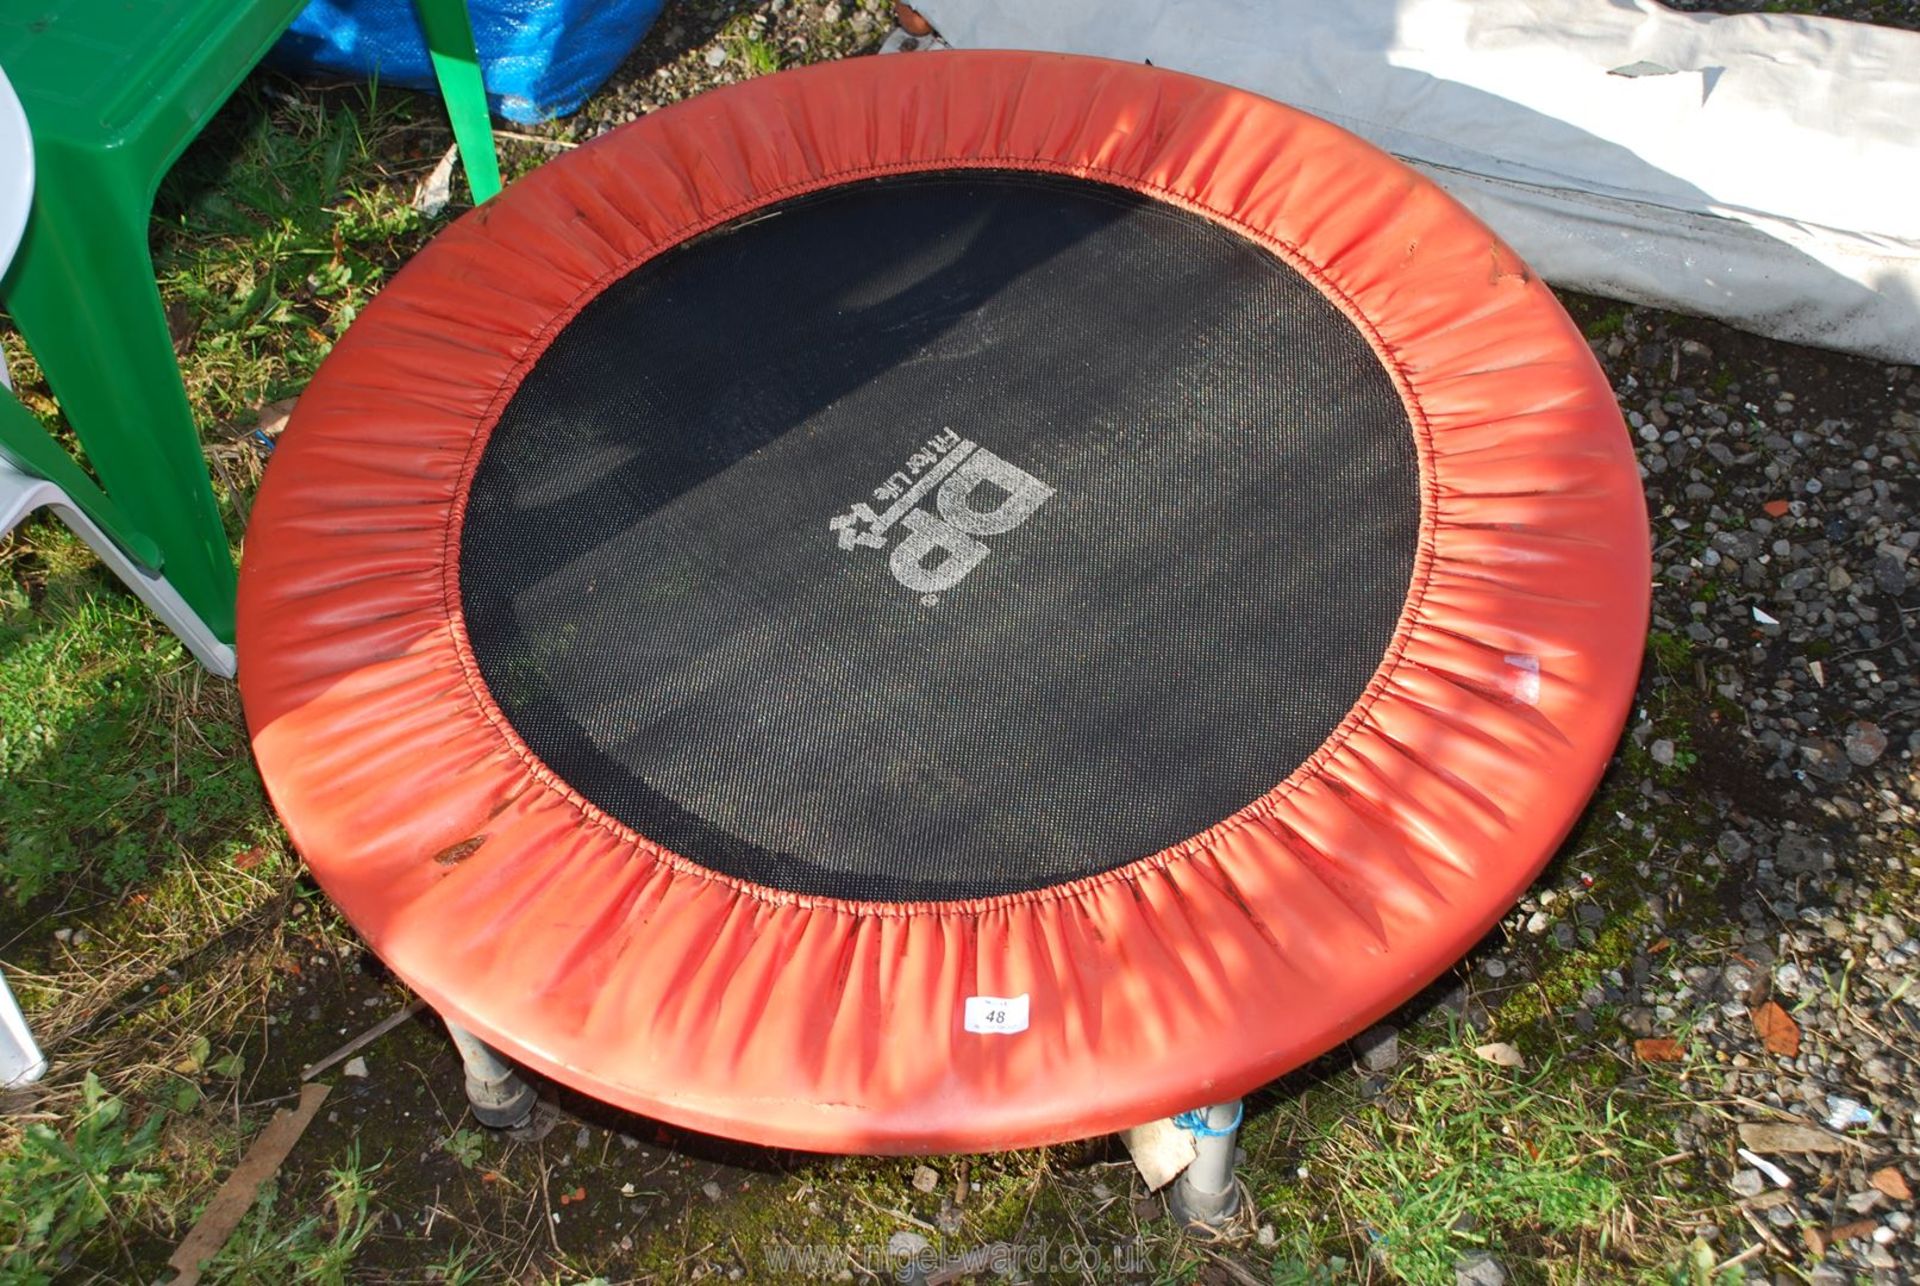 Small trampoline/exerciser